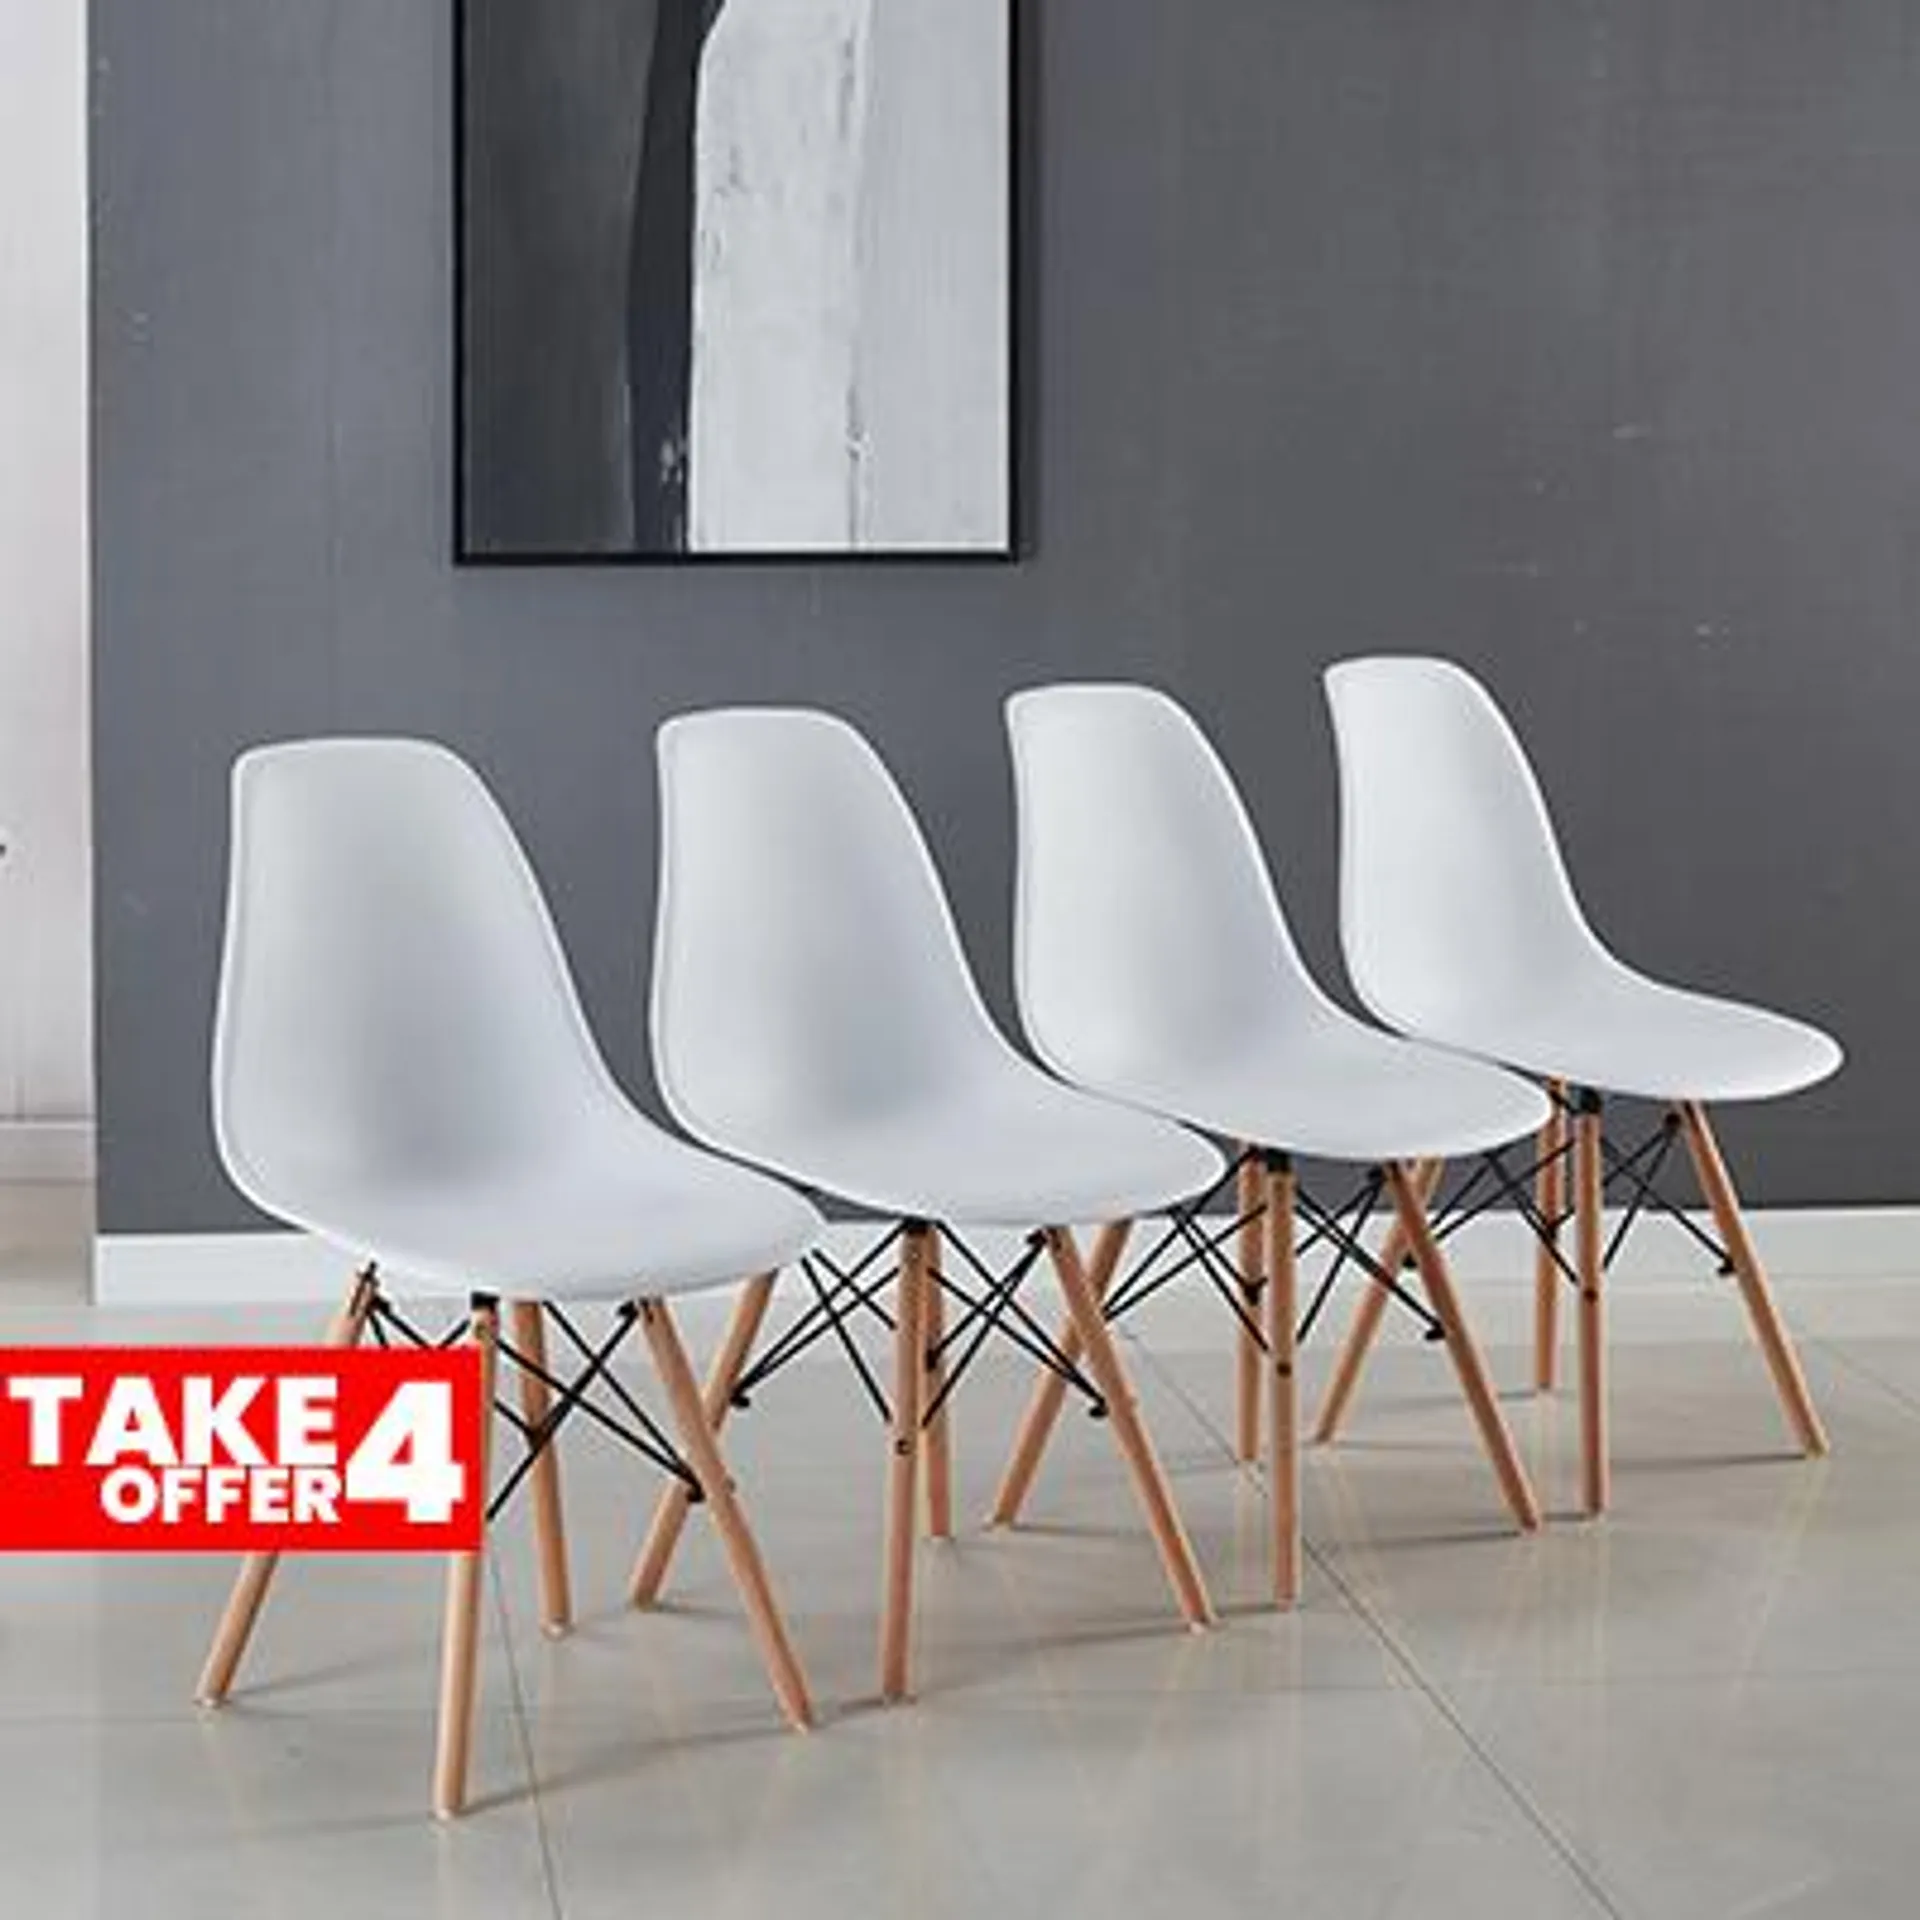 503 Retro Chair – Take 4